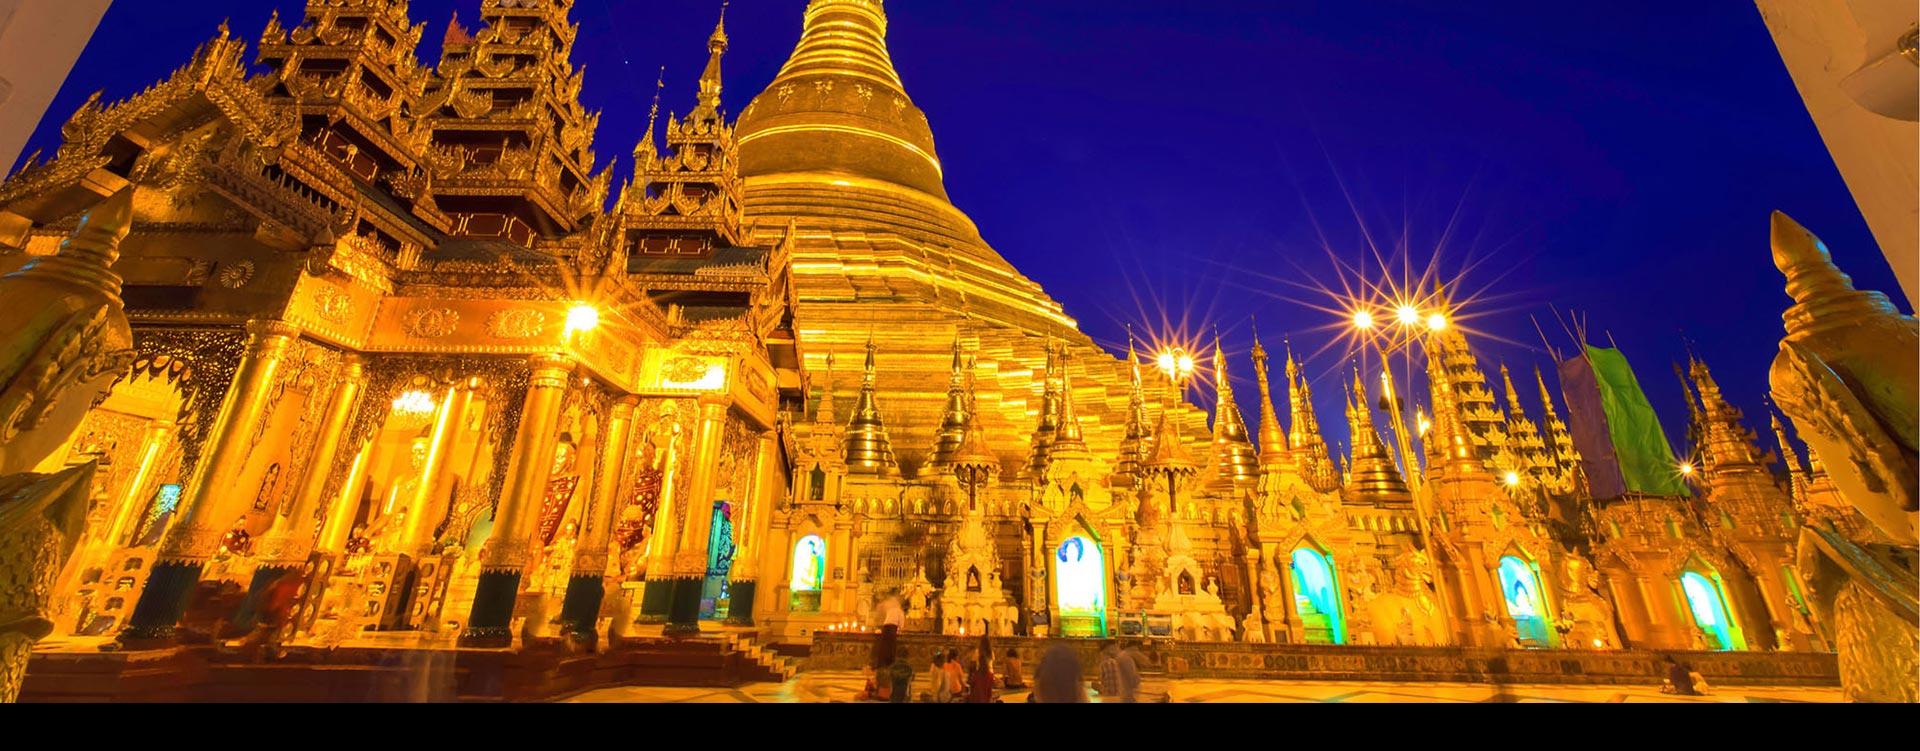 Enjoy authentic Burmese villages with business class flights to Yangon. - IFlyFirstClass